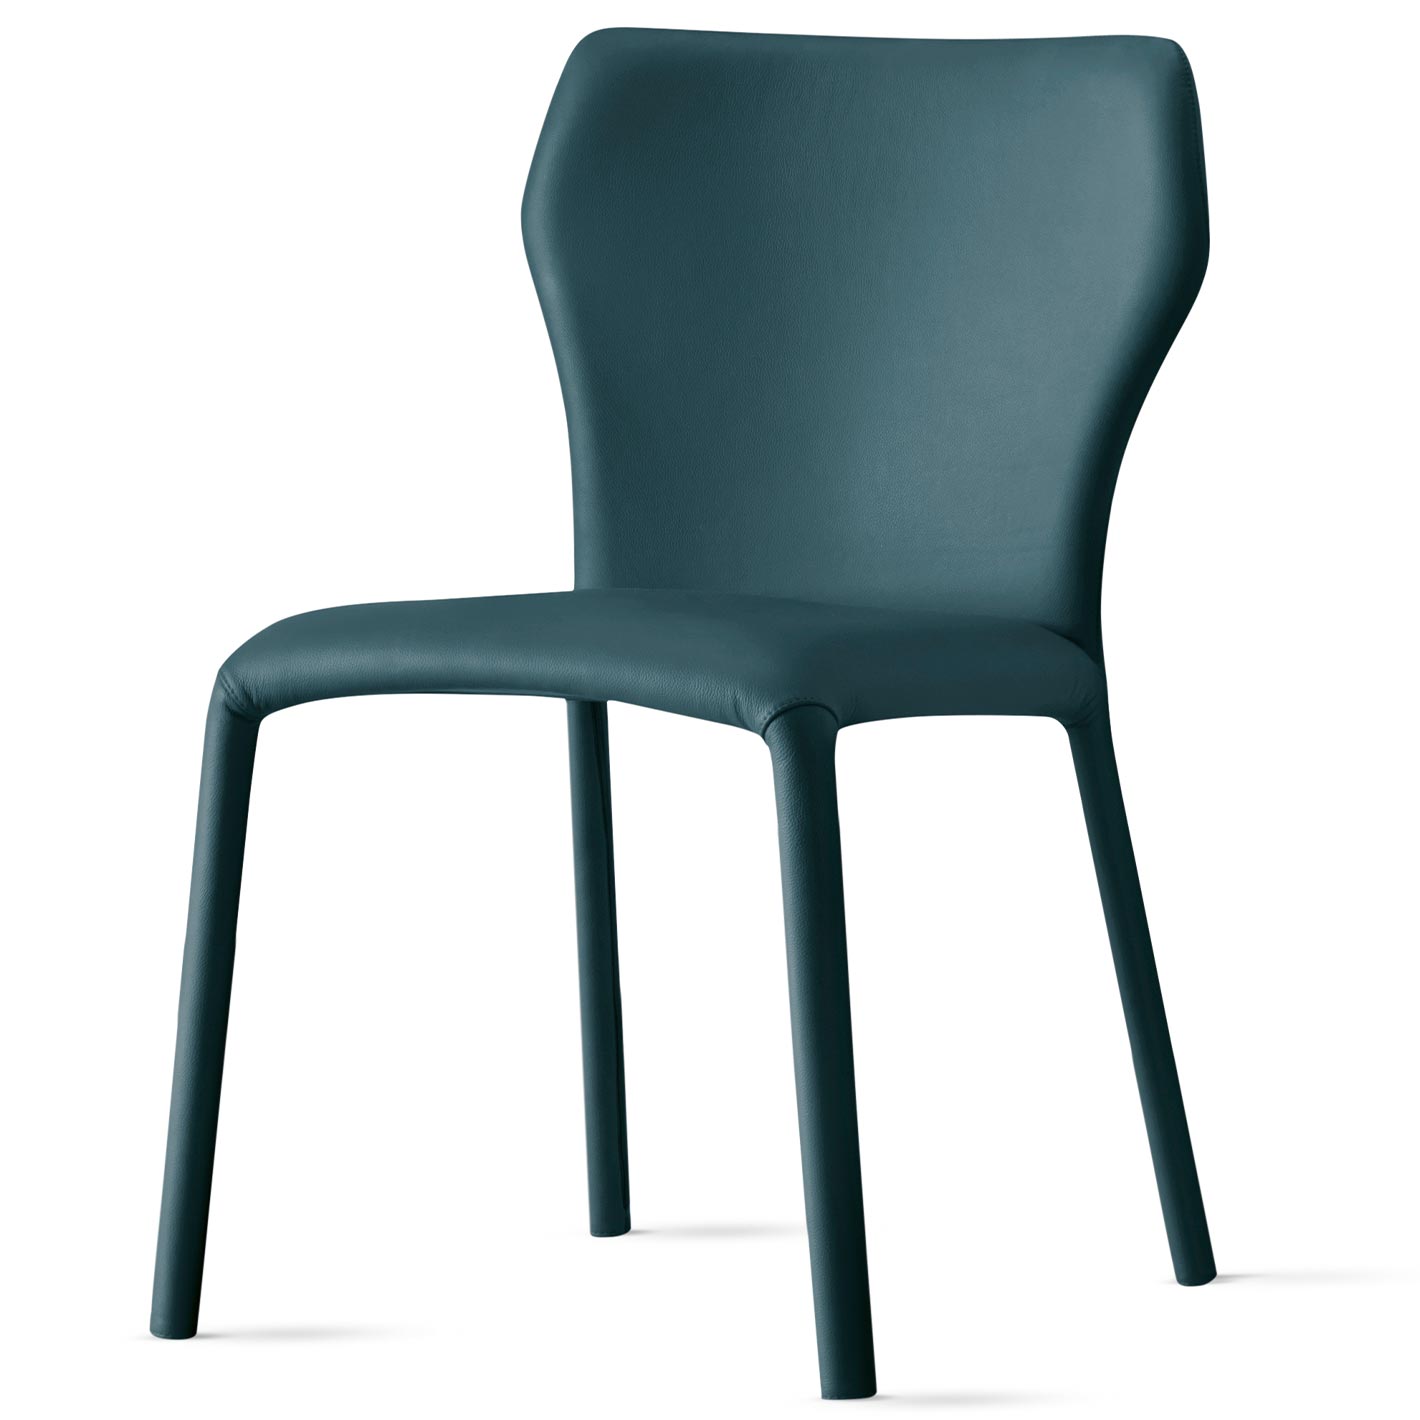 Stühle unter 500 Euro - SHILA Stuhl